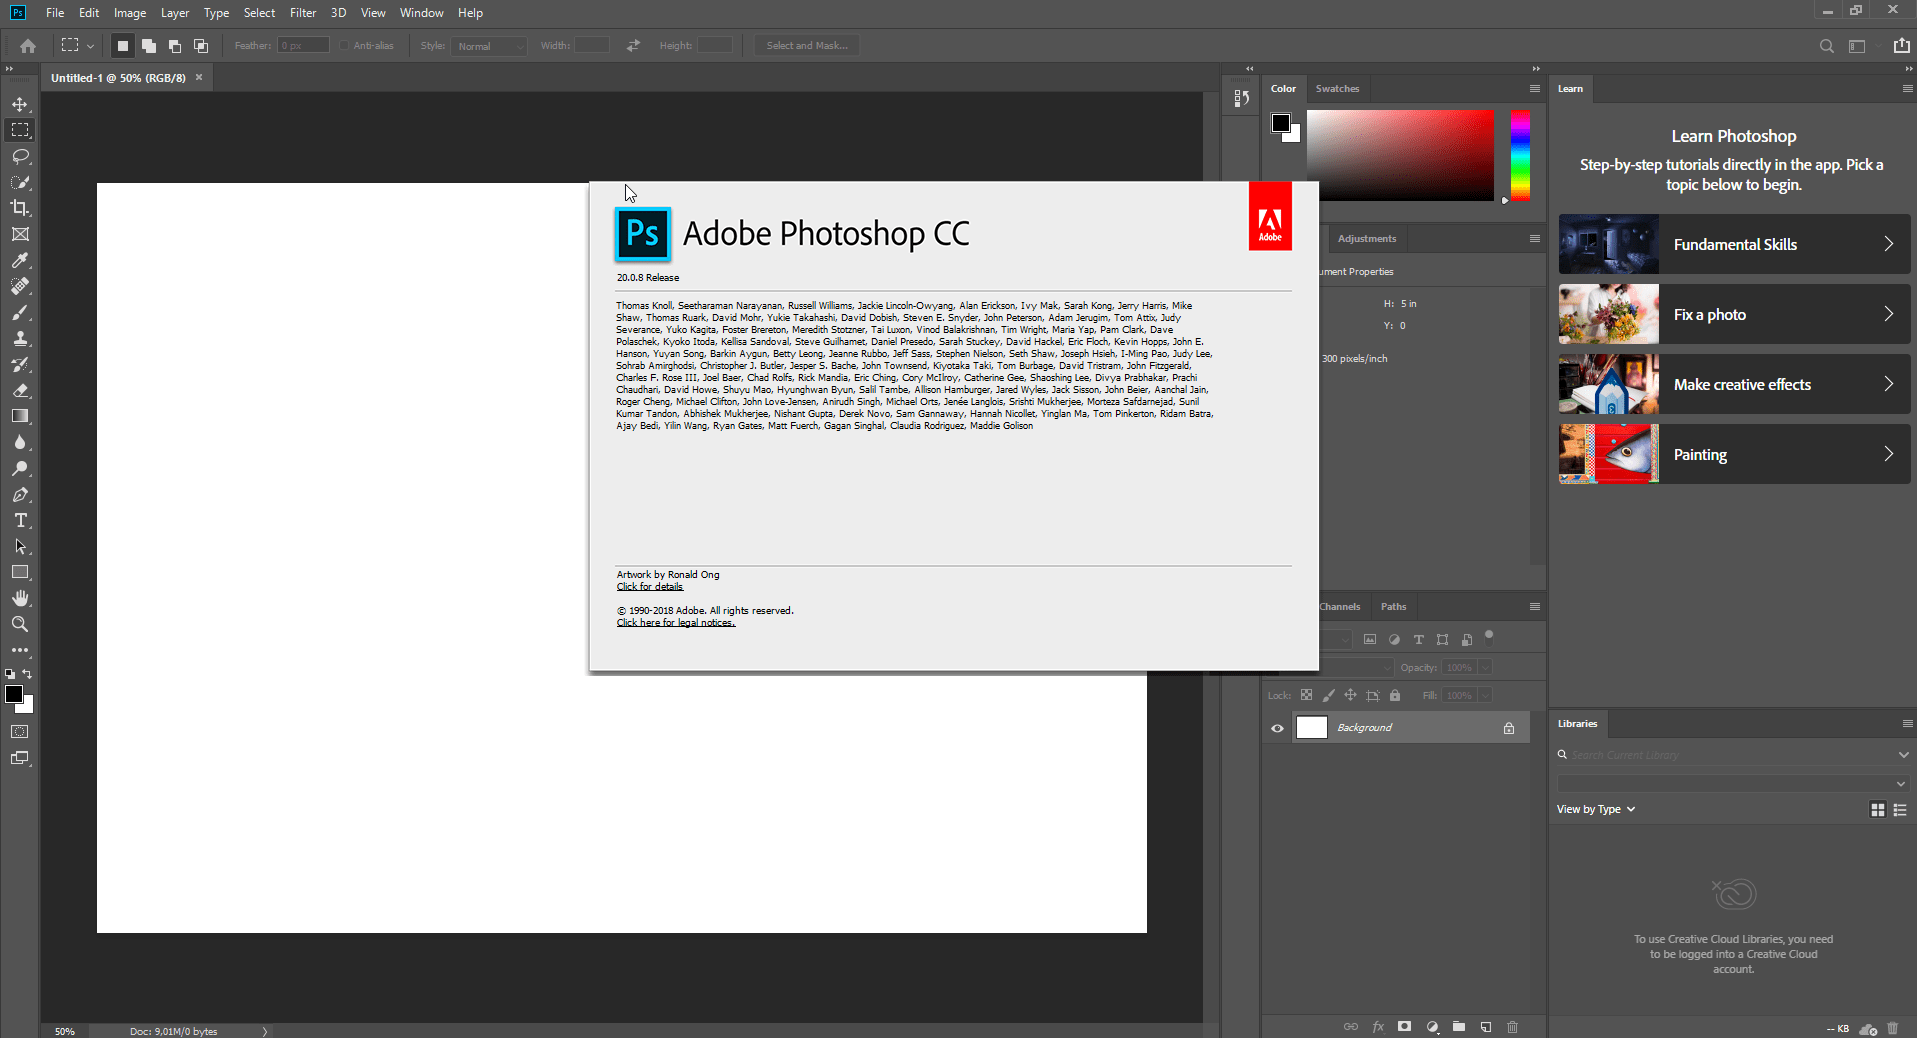 Adobe Photoshop CC 2018 v19.1.2.45971 Portable Free Download